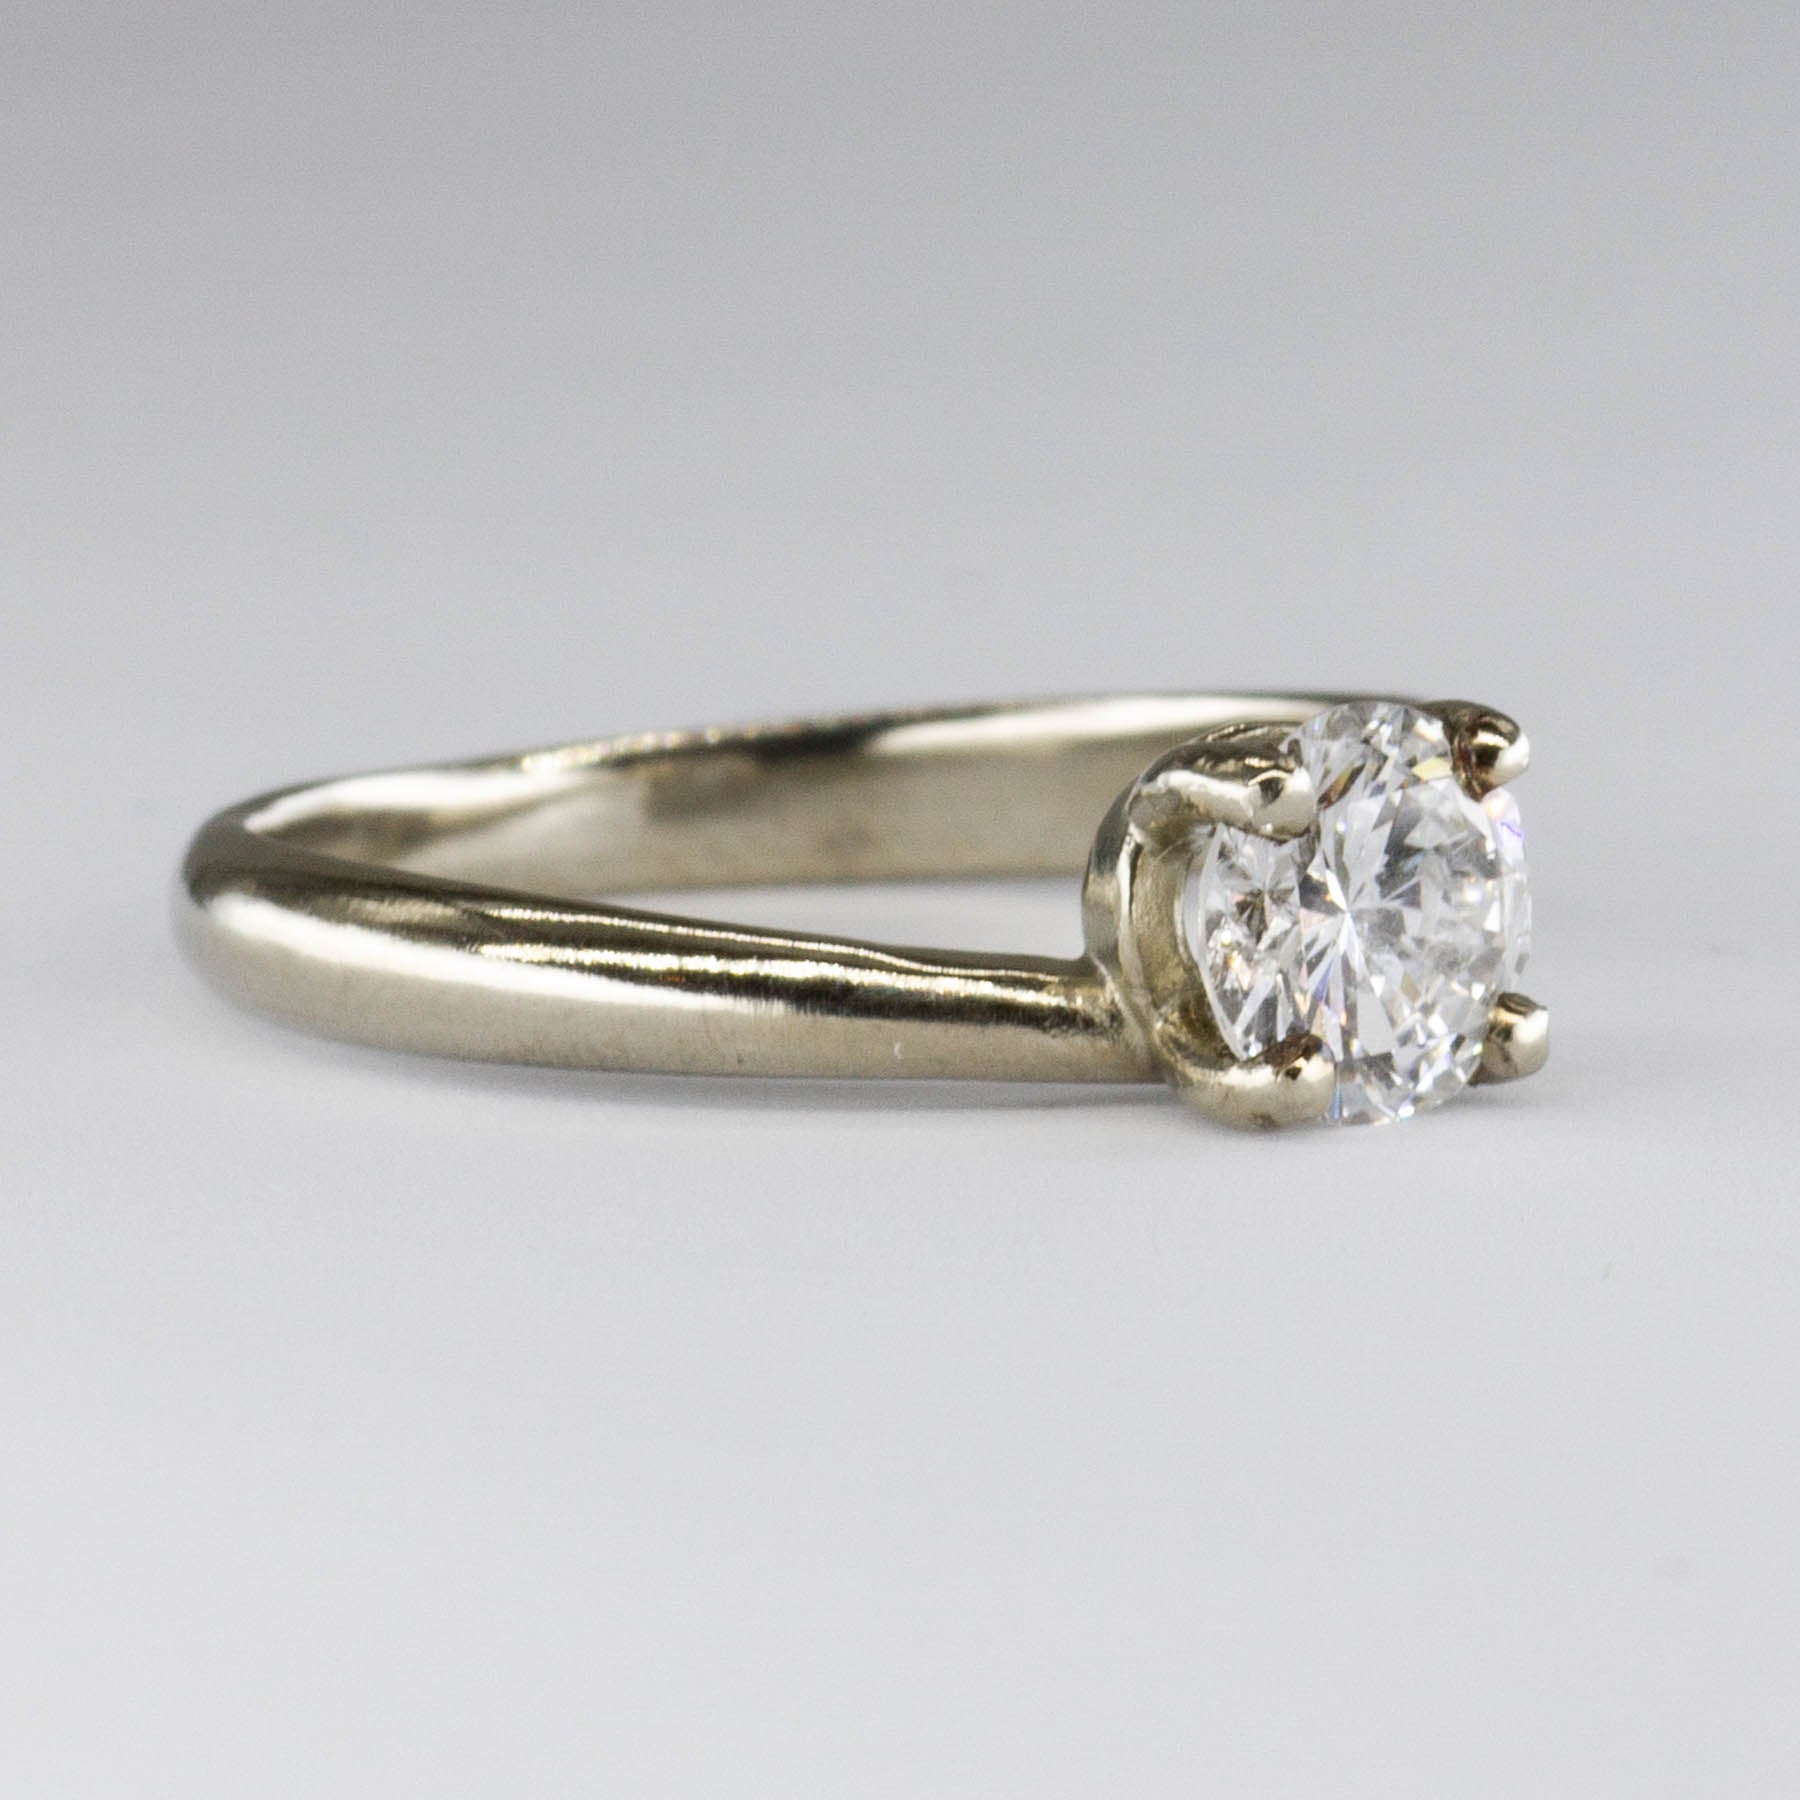 '100 Ways' GIA Certified Diamond Solitaire 18K Ring | 0.71 ct VS1 E | SZ 5.5 - 100 Ways